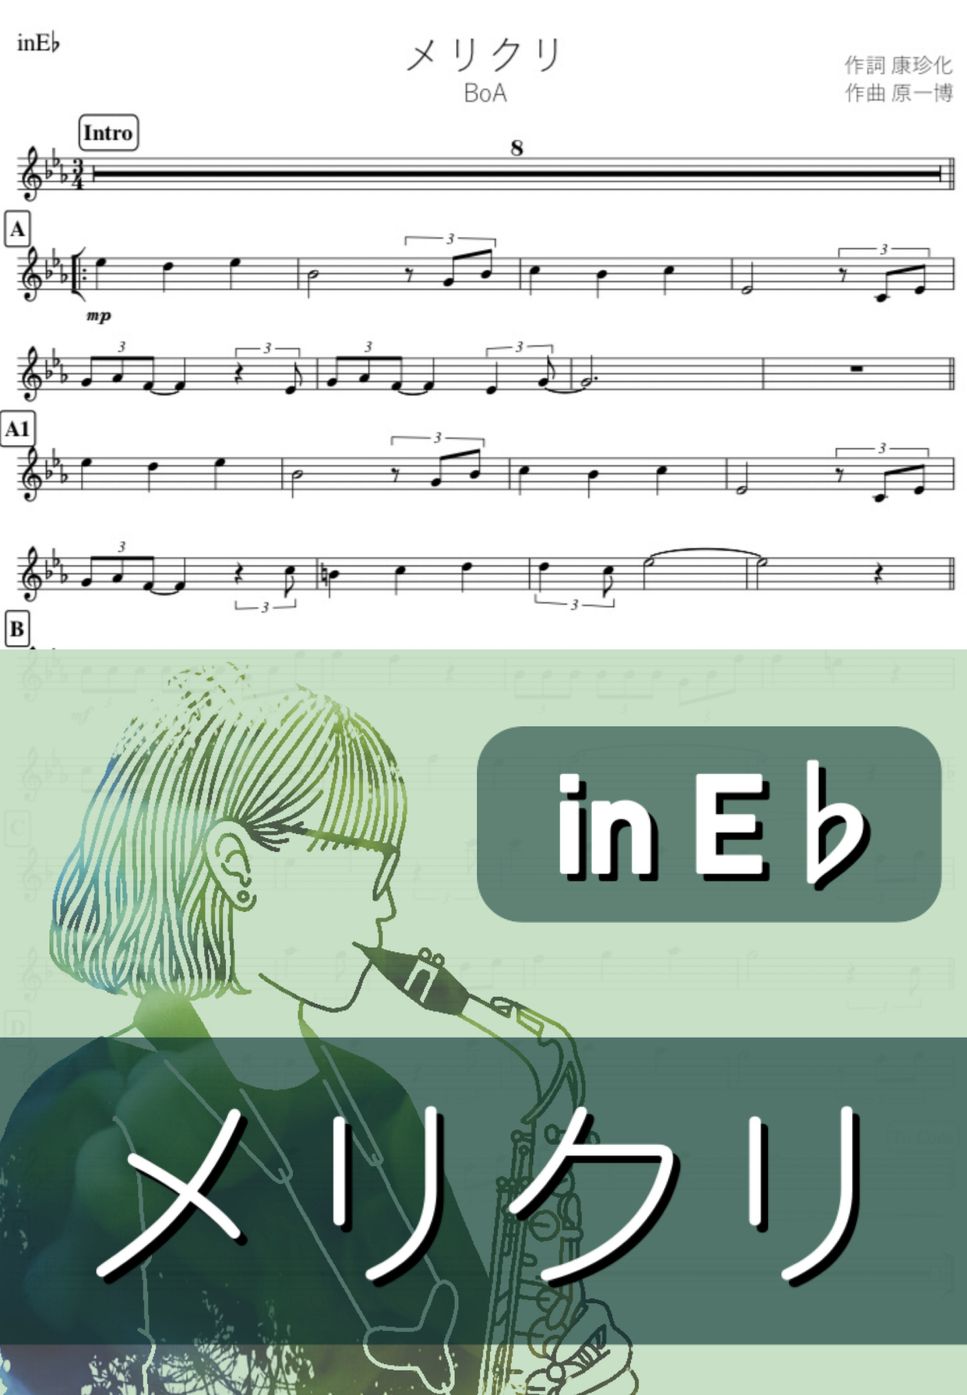 BoA - メリクリ (E♭) by kanamusic